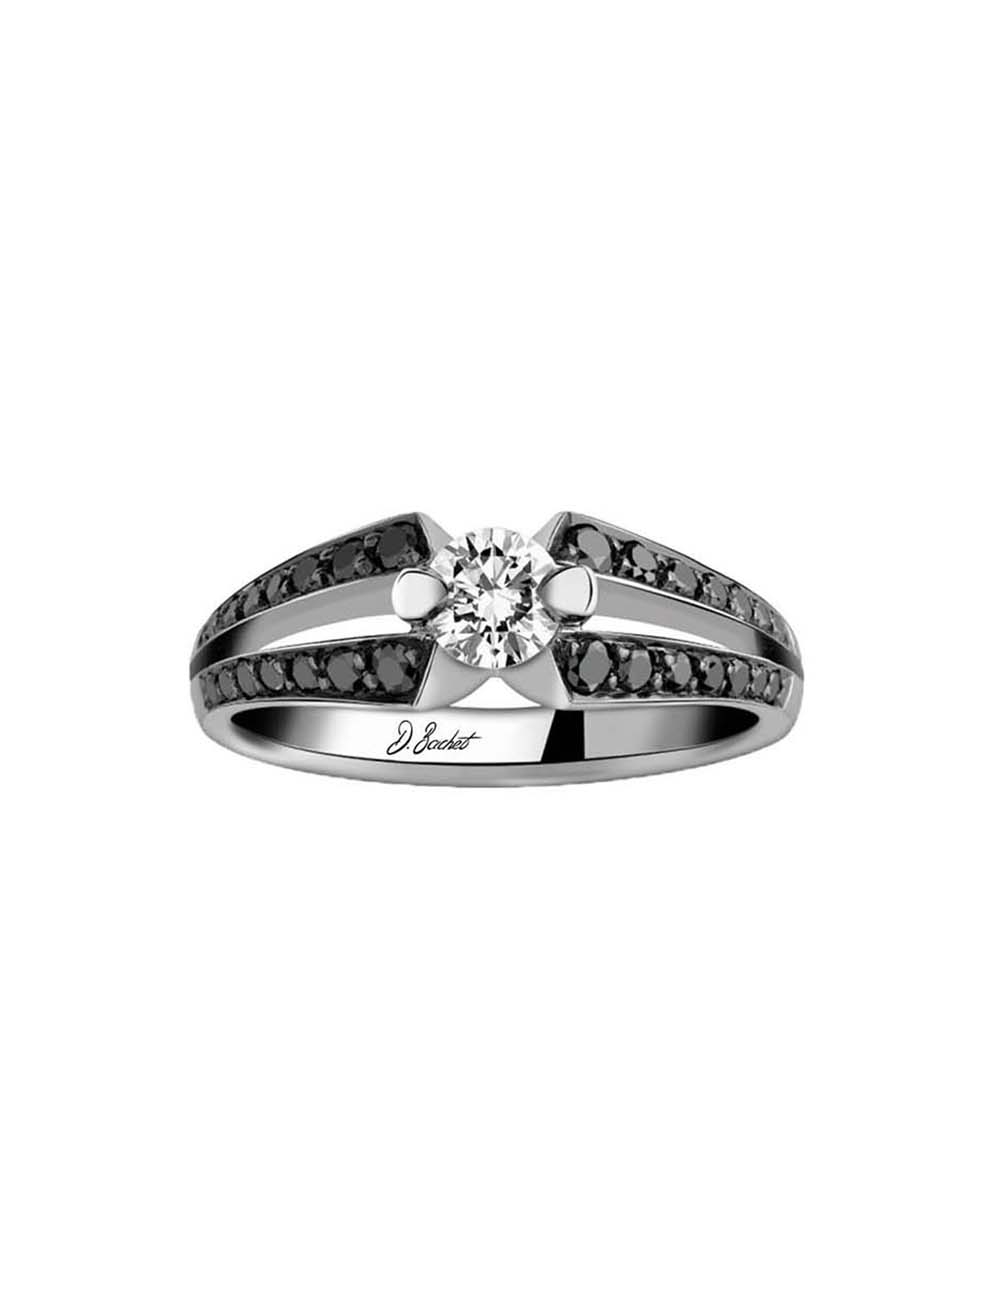 Modern engagement ring set with a 0.30 carat white diamond and black diamonds